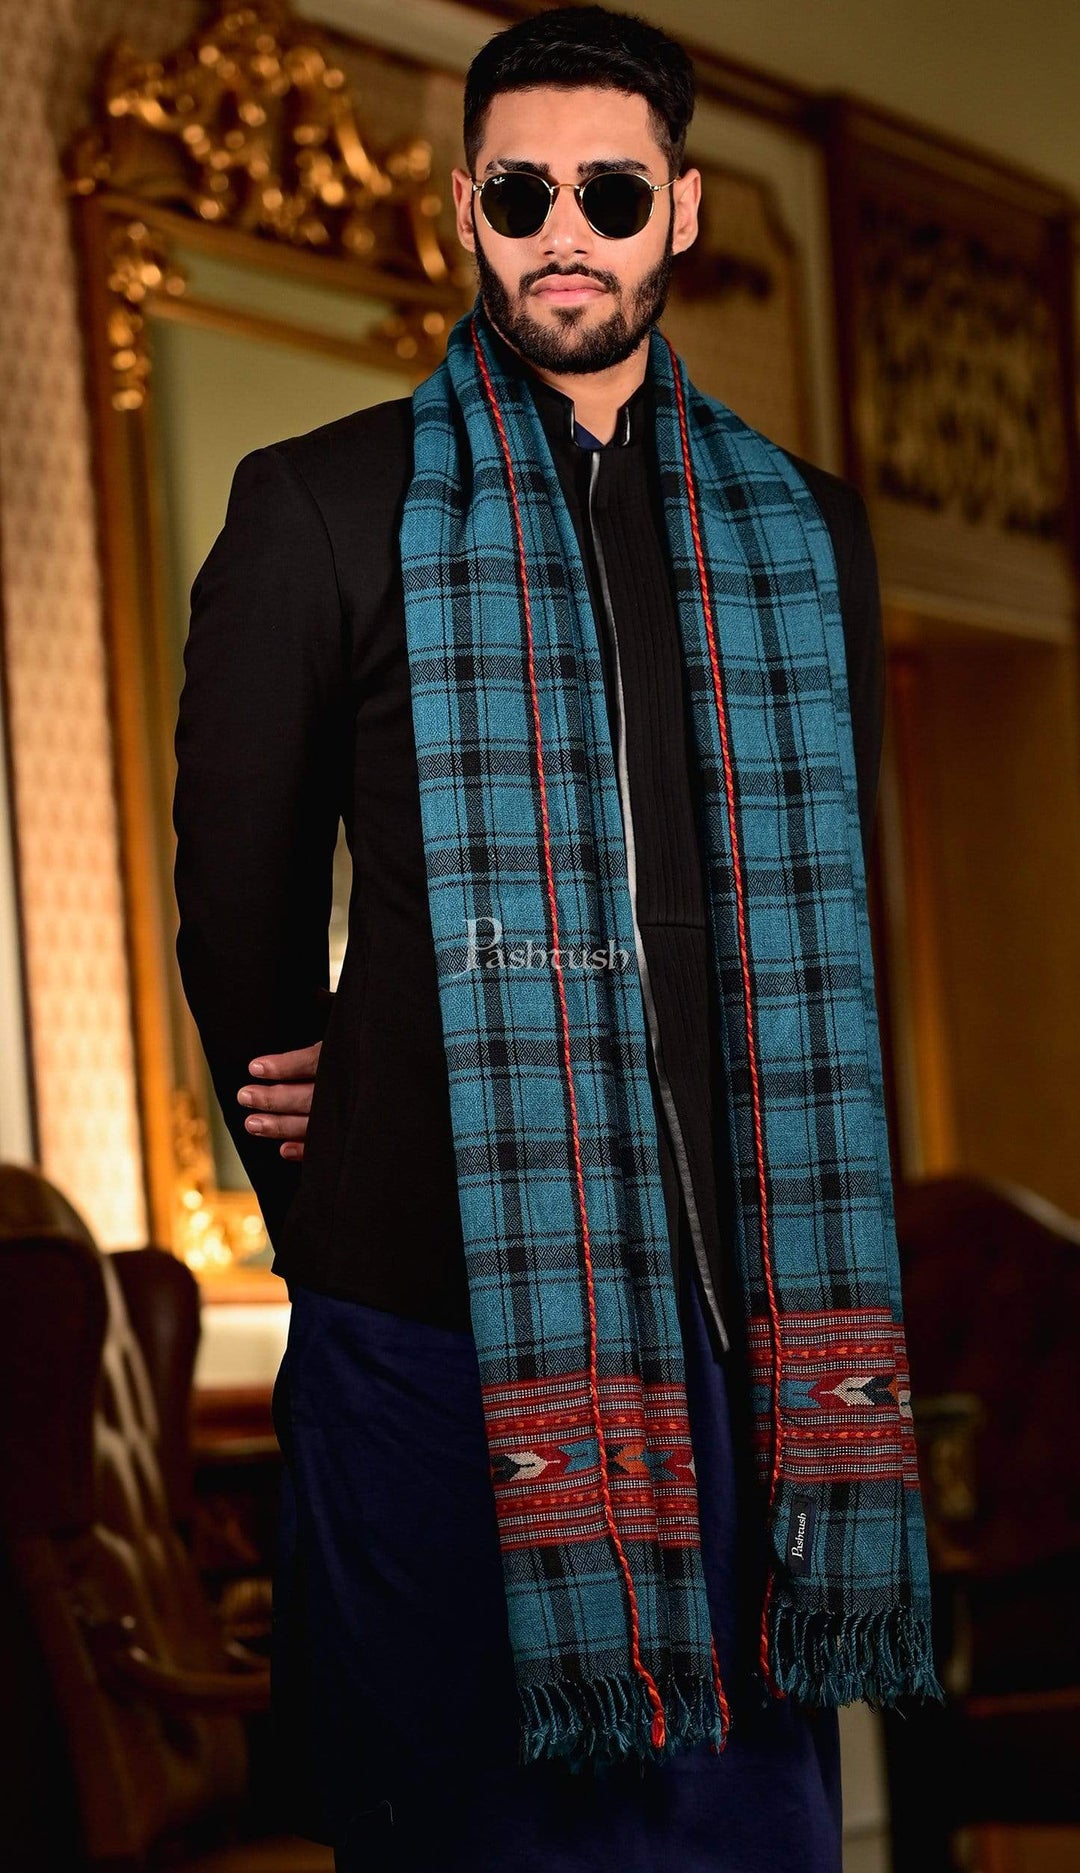 Pashtush India 70x200 Pashtush Mens Aztec Wool, Authentic 100% Handwoven Stole, Extra Warm, Blue